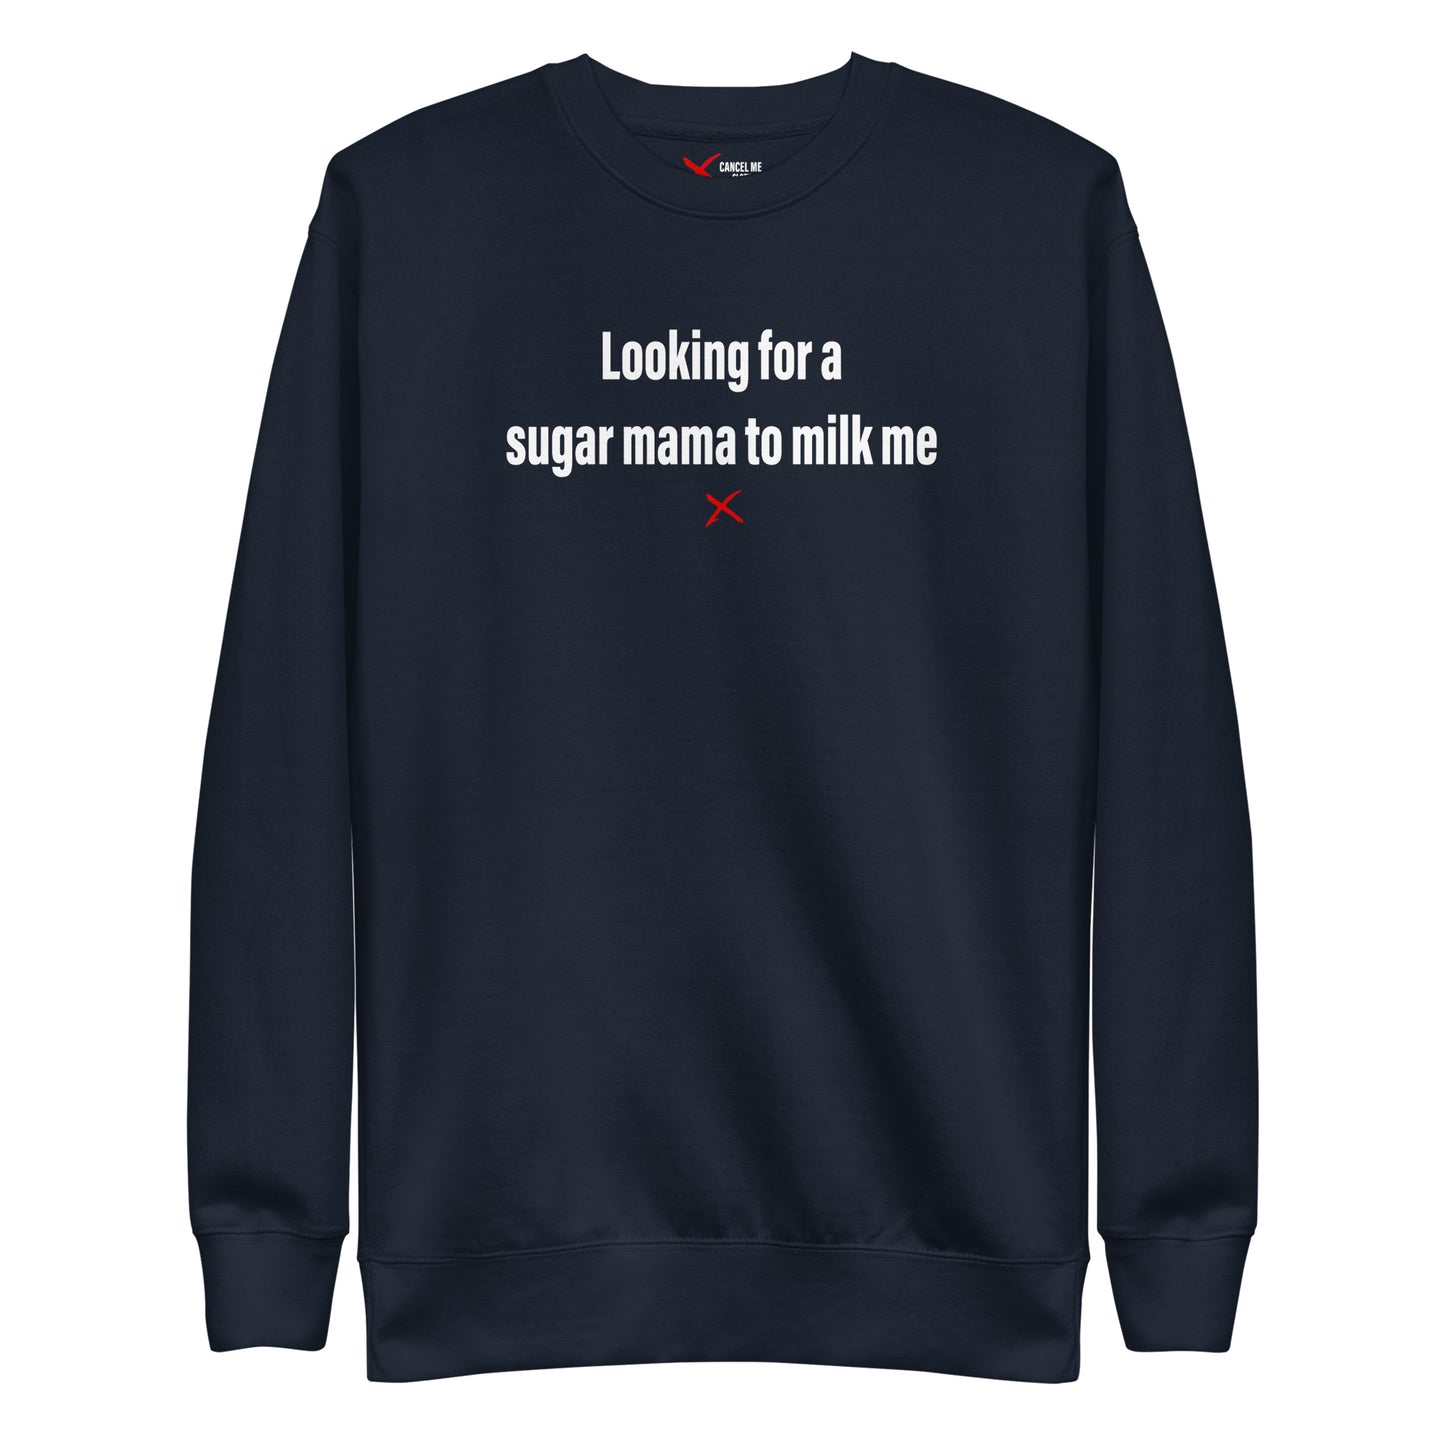 Looking for a sugar mama to milk me - Sweatshirt